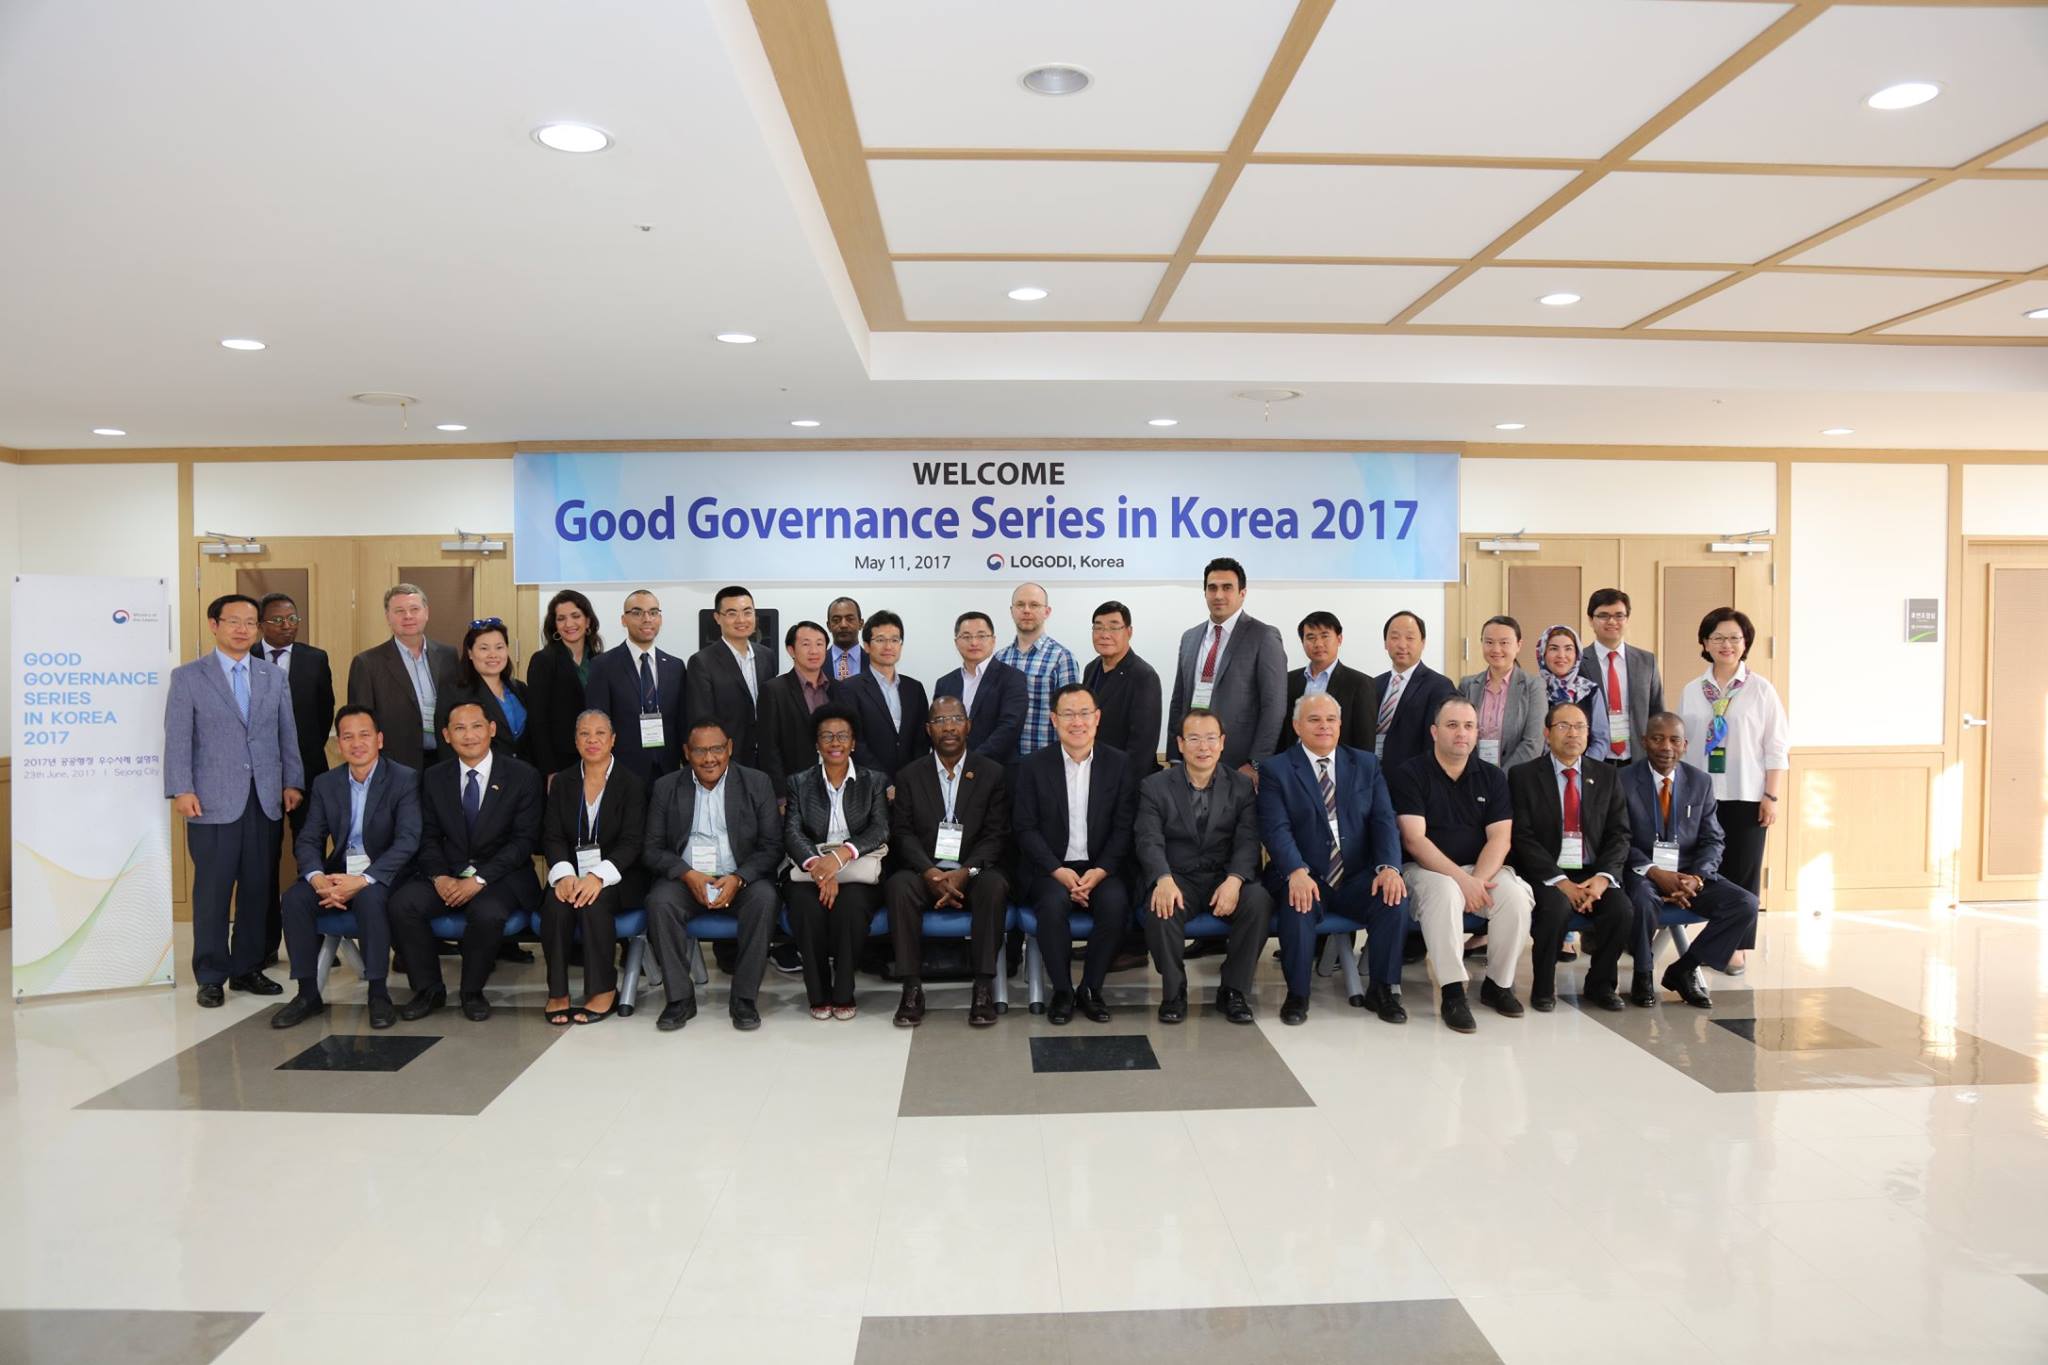 Korean good governance showcased to international community